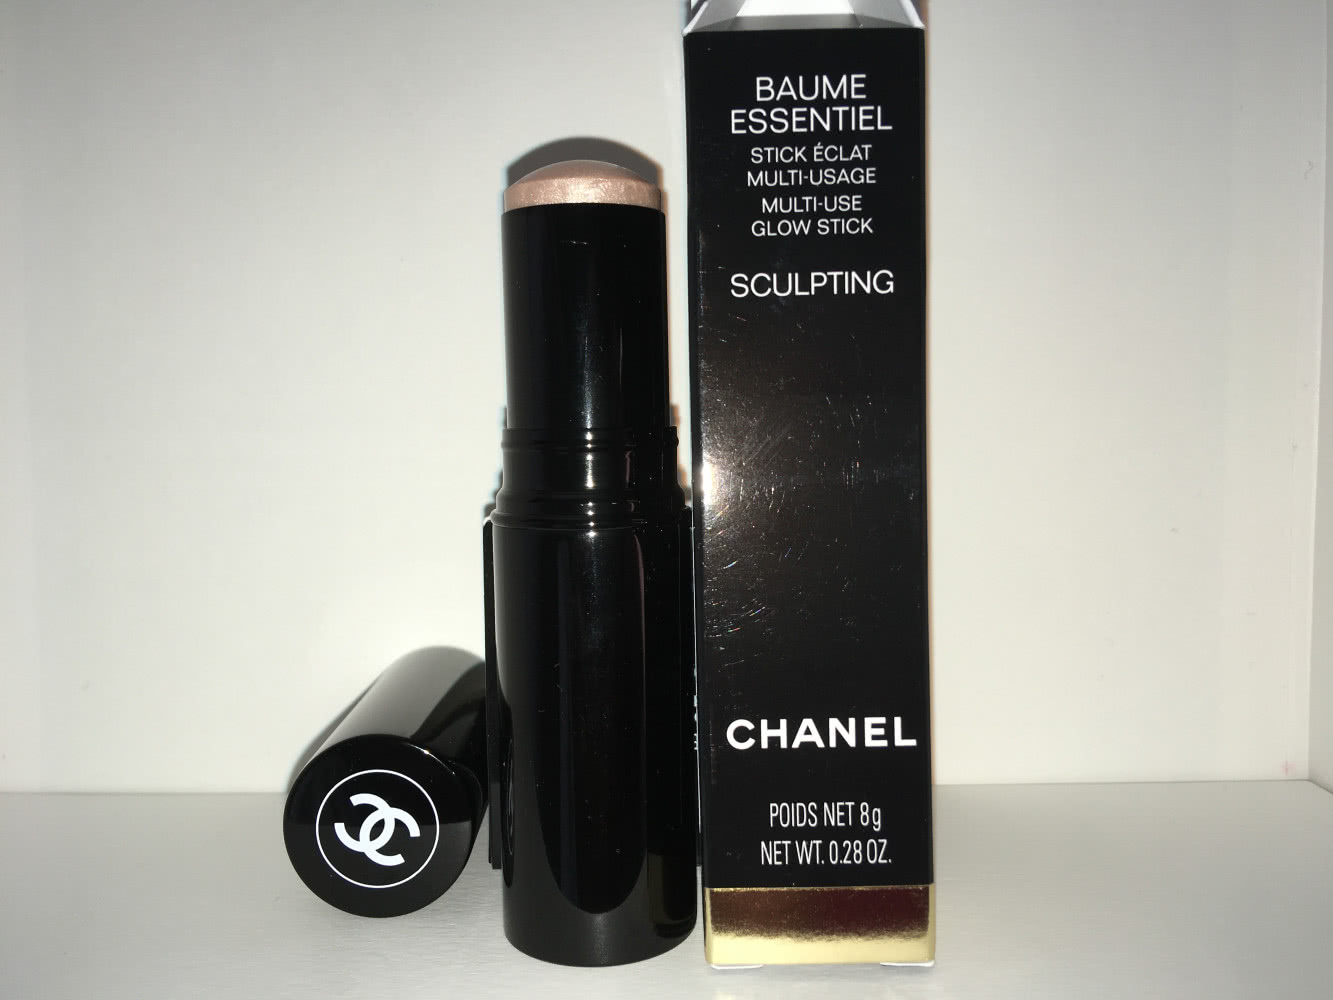 Chanel Baume Essentiel Multi-Use Glow Stick в оттенке SCULPTING